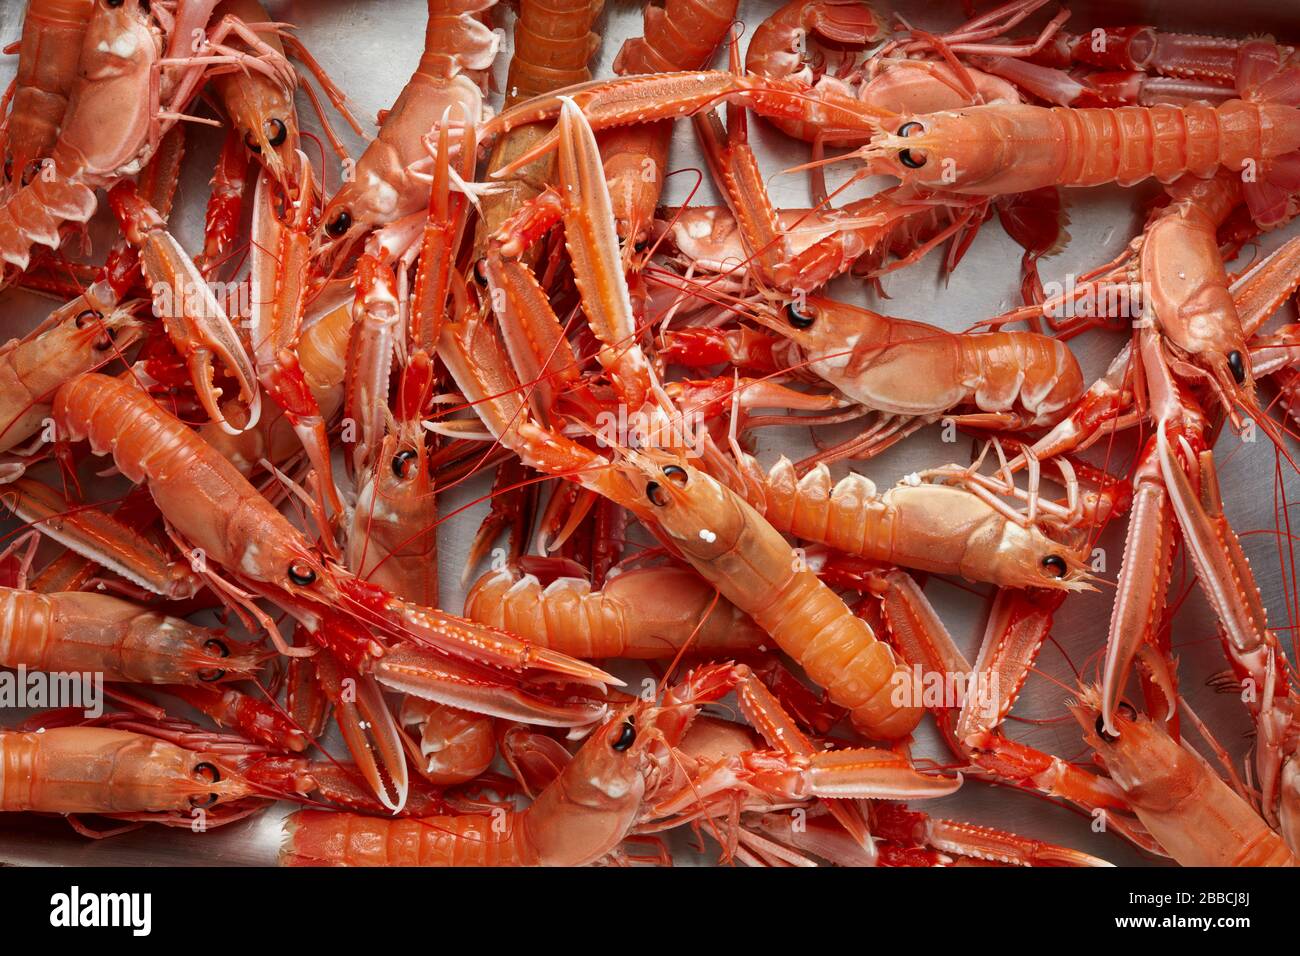 Langoustine Dublin bay prawn Norway lobster crustacean Nephrops Stock Photo